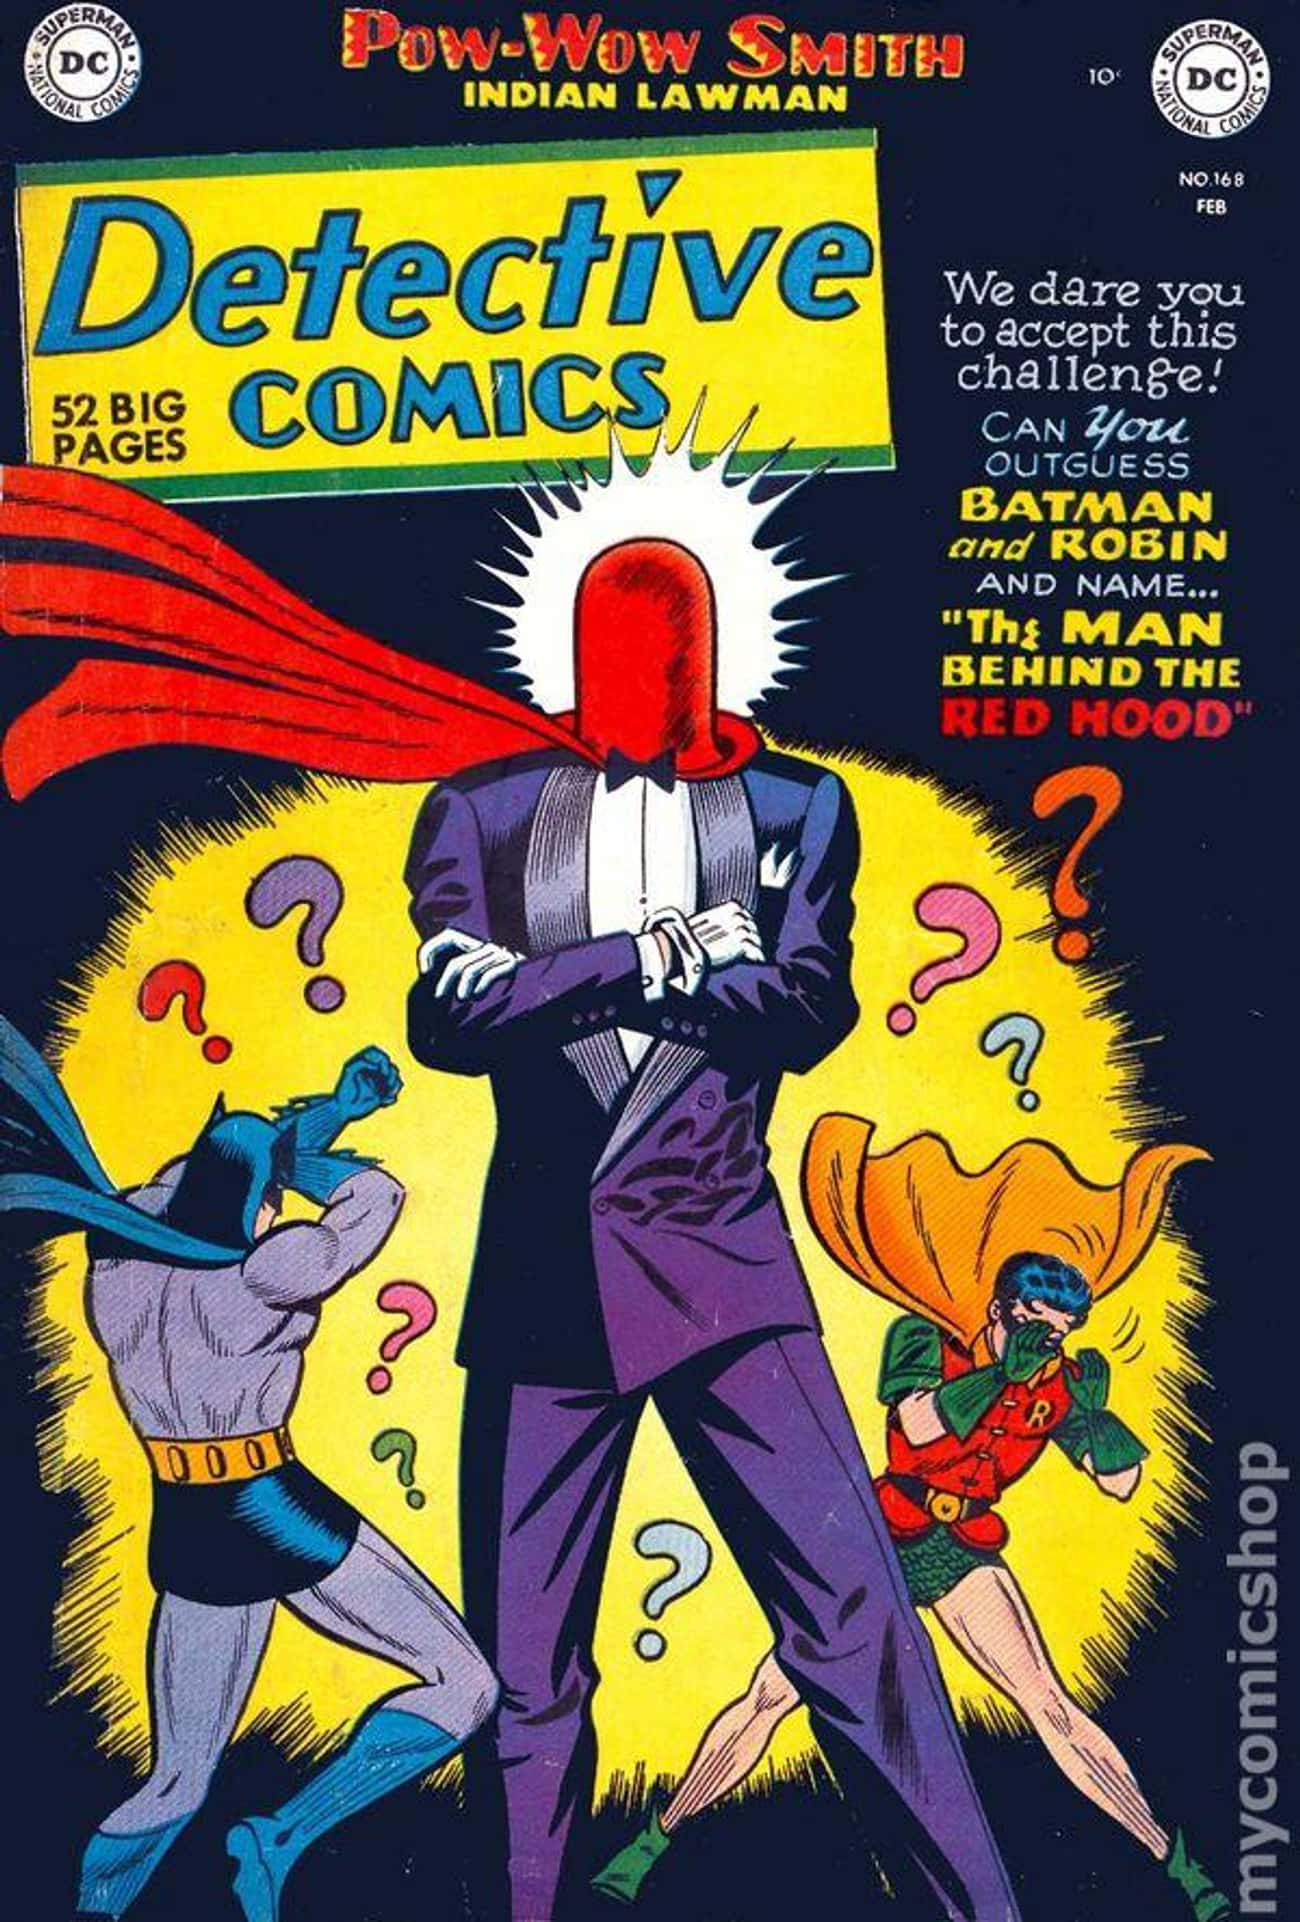 1950s Comic Book Covers | Cool 50s Comic Cover Art